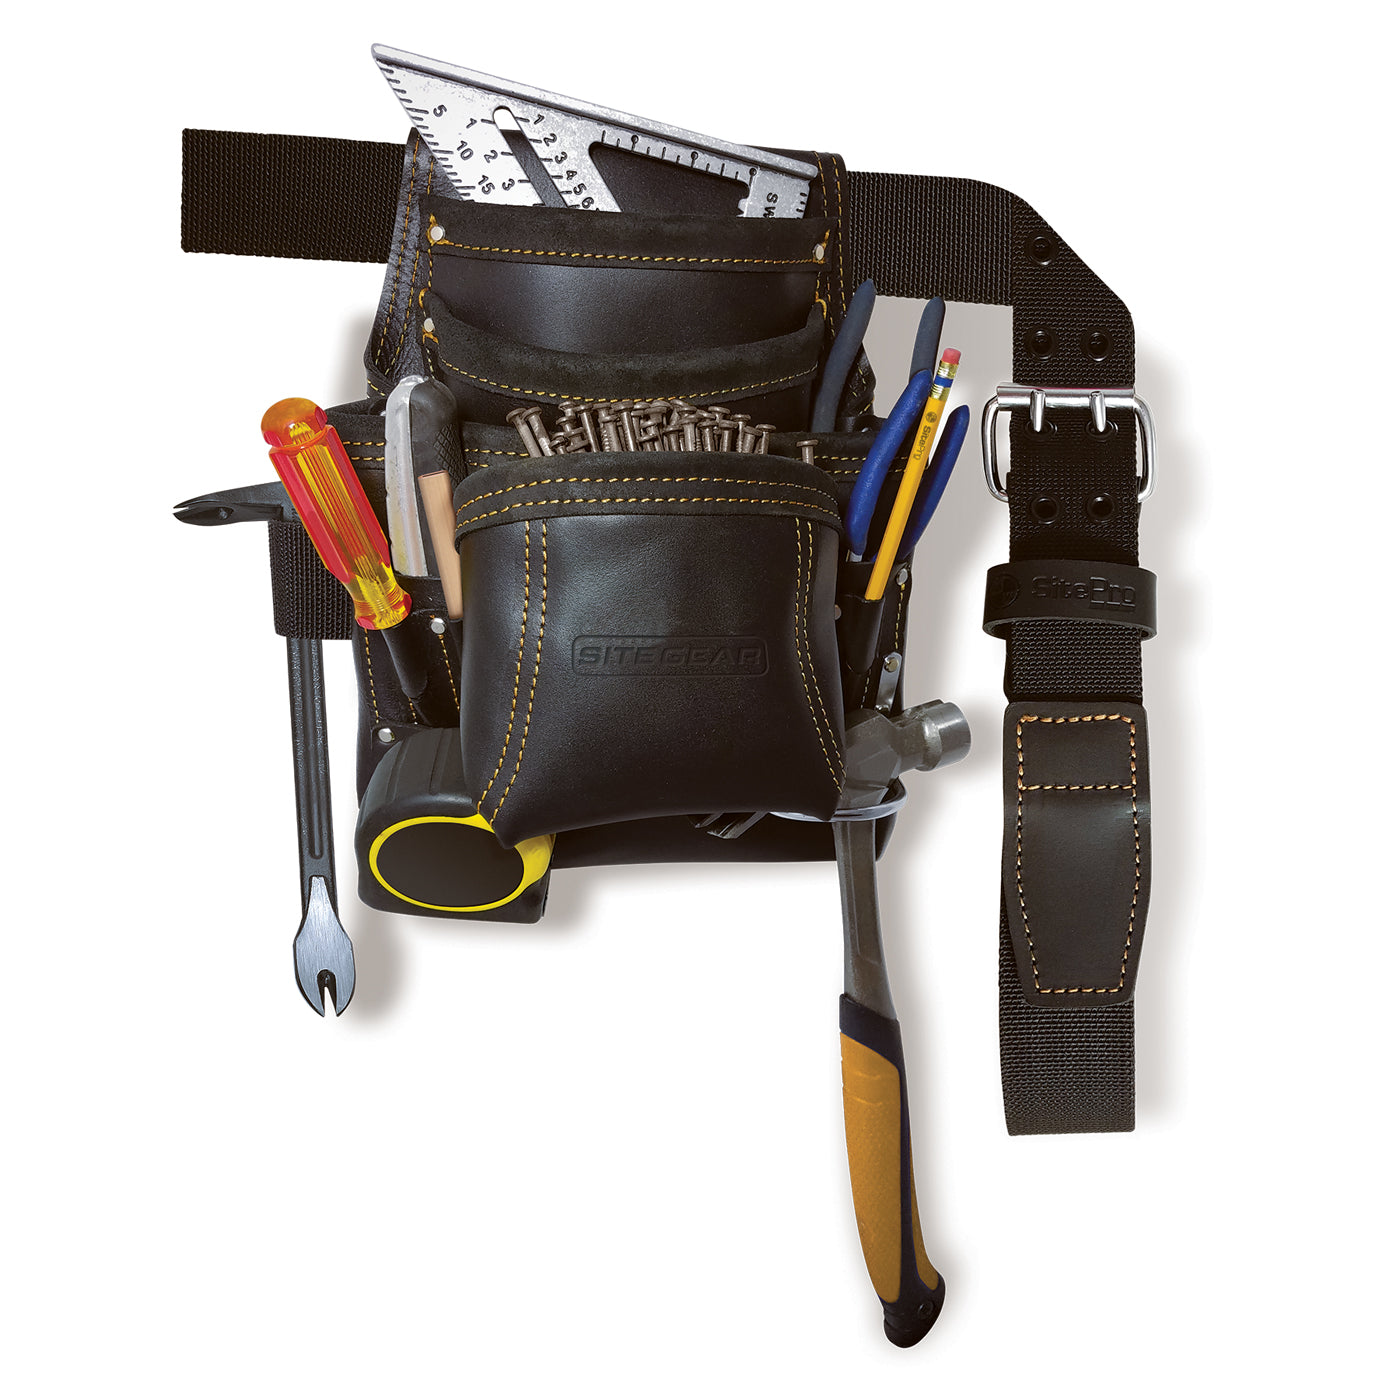 SITEGEAR 10-Pocket Carpenter’s Top Grain Leather Nail and Tool Bag w/Belt